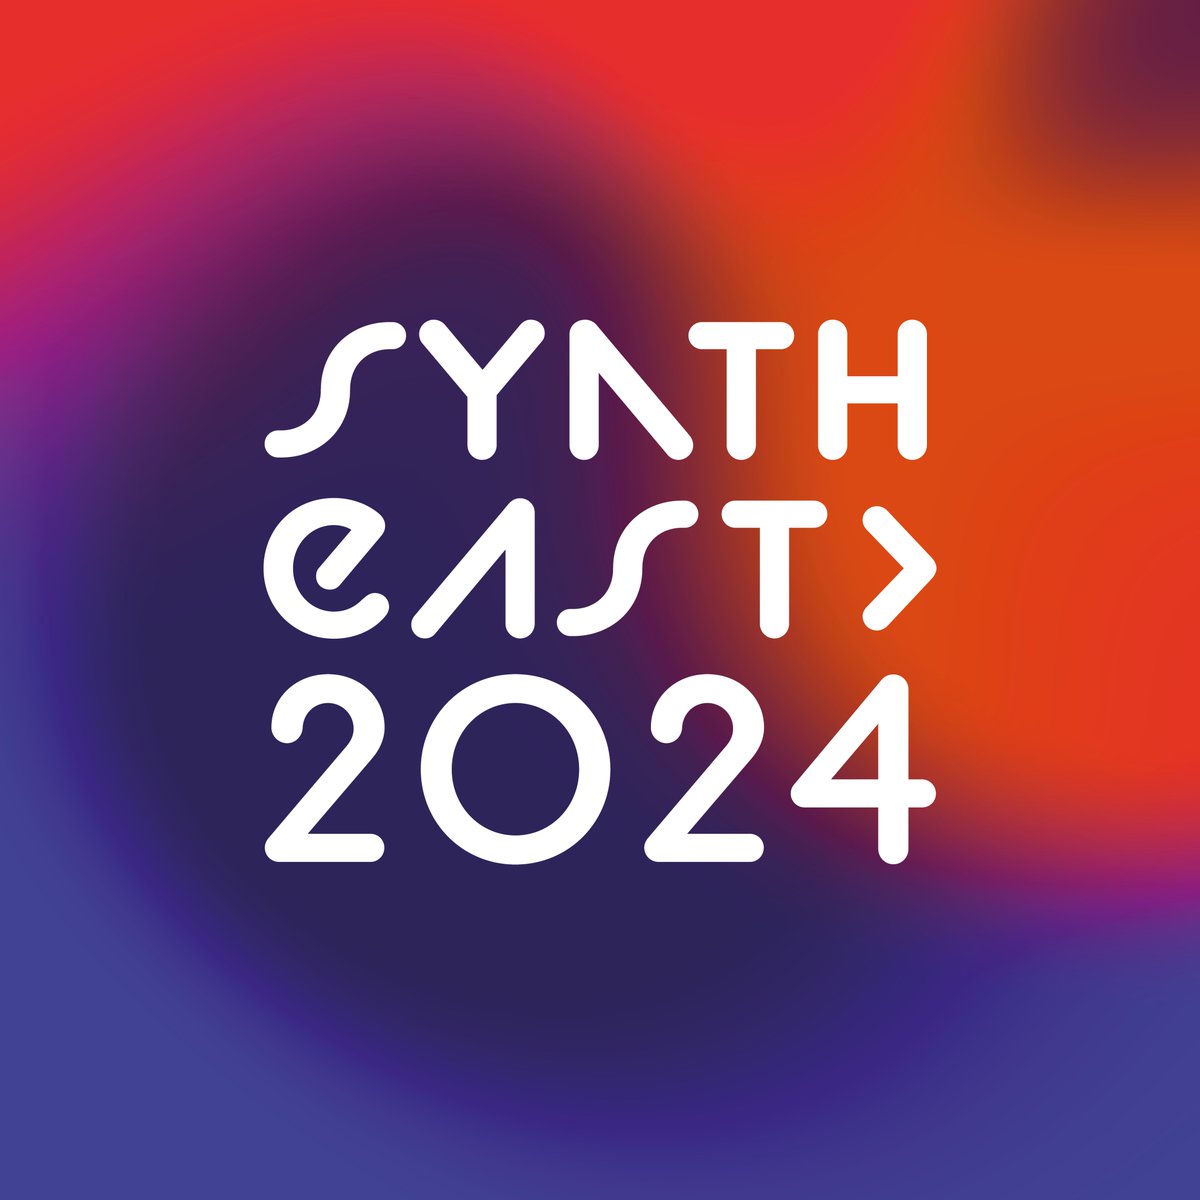 Synth East > 2024 youtu.be/PvBVWIT-WgI?si…